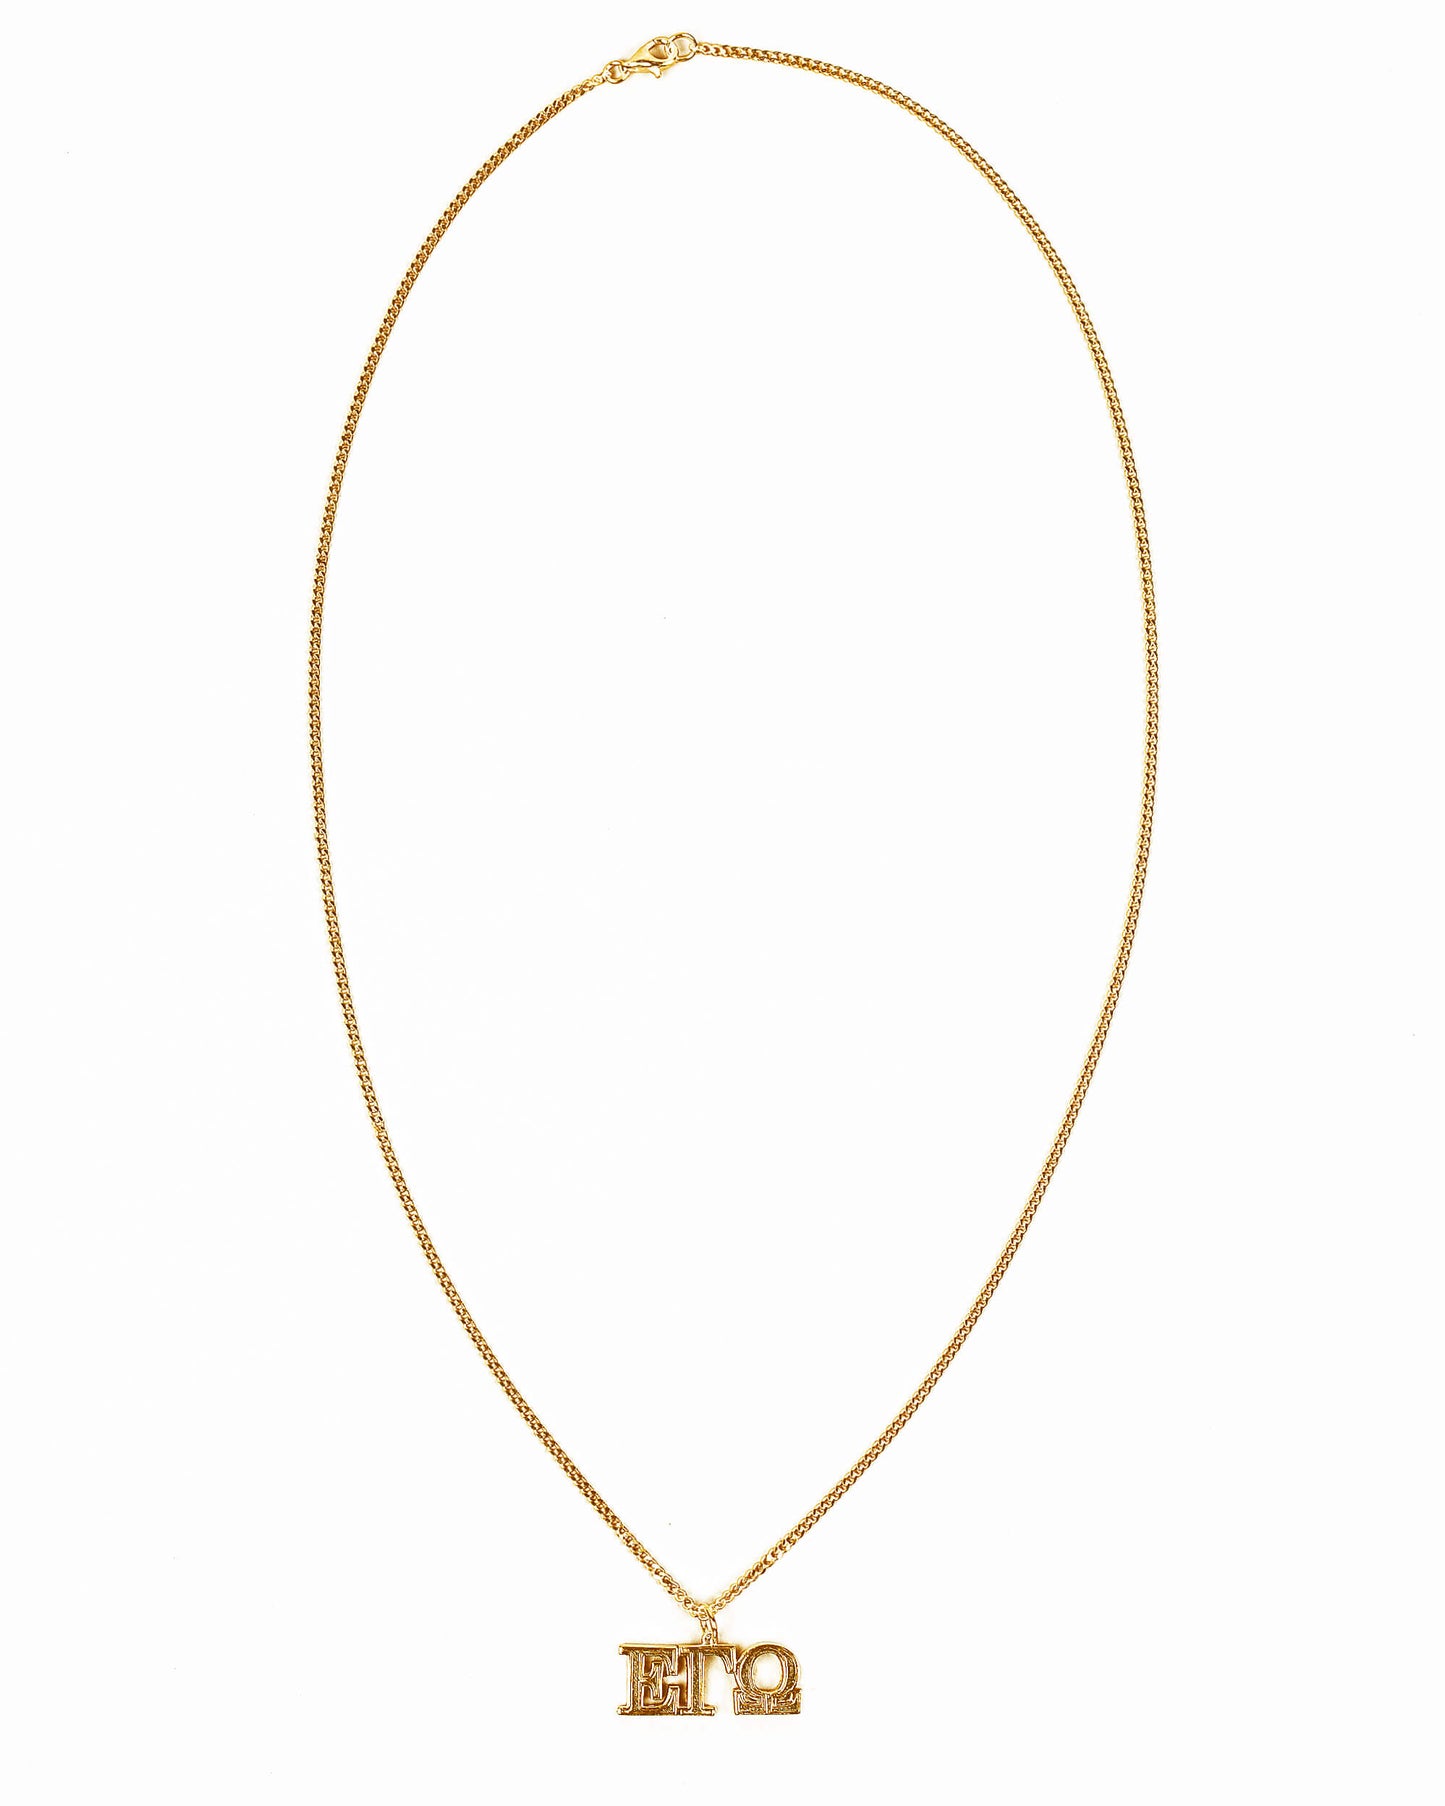 The ΕΓΩ pendant necklace